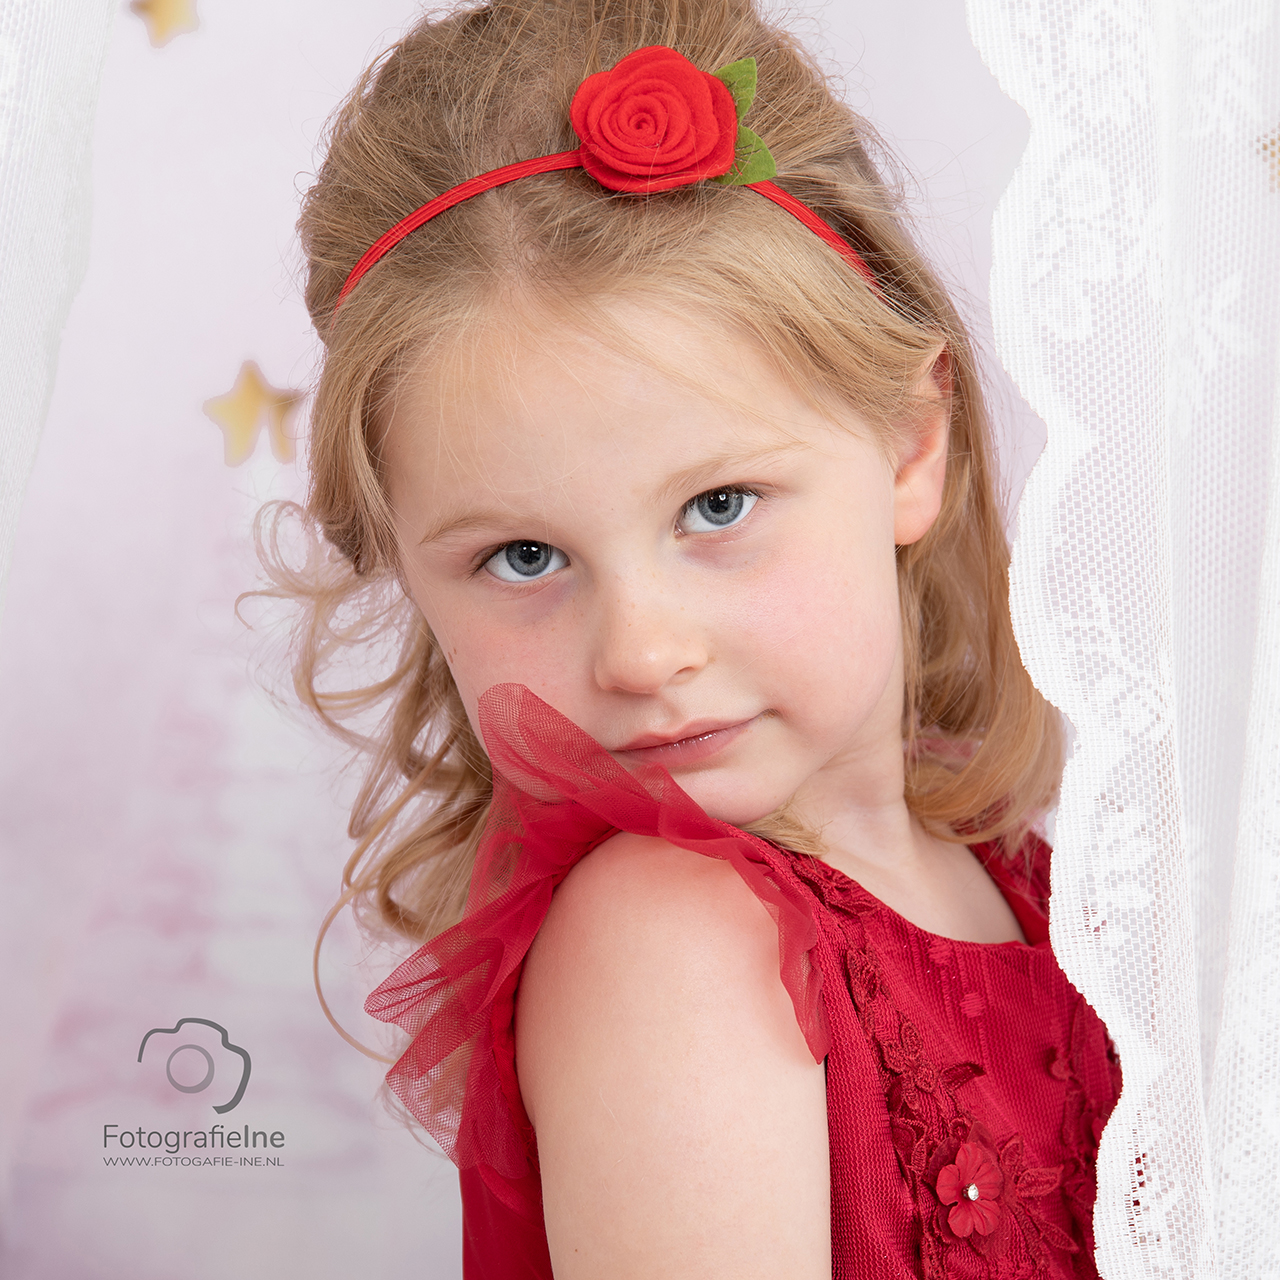 Fotografie Ine Prinsessen fotoshoot rode jurk